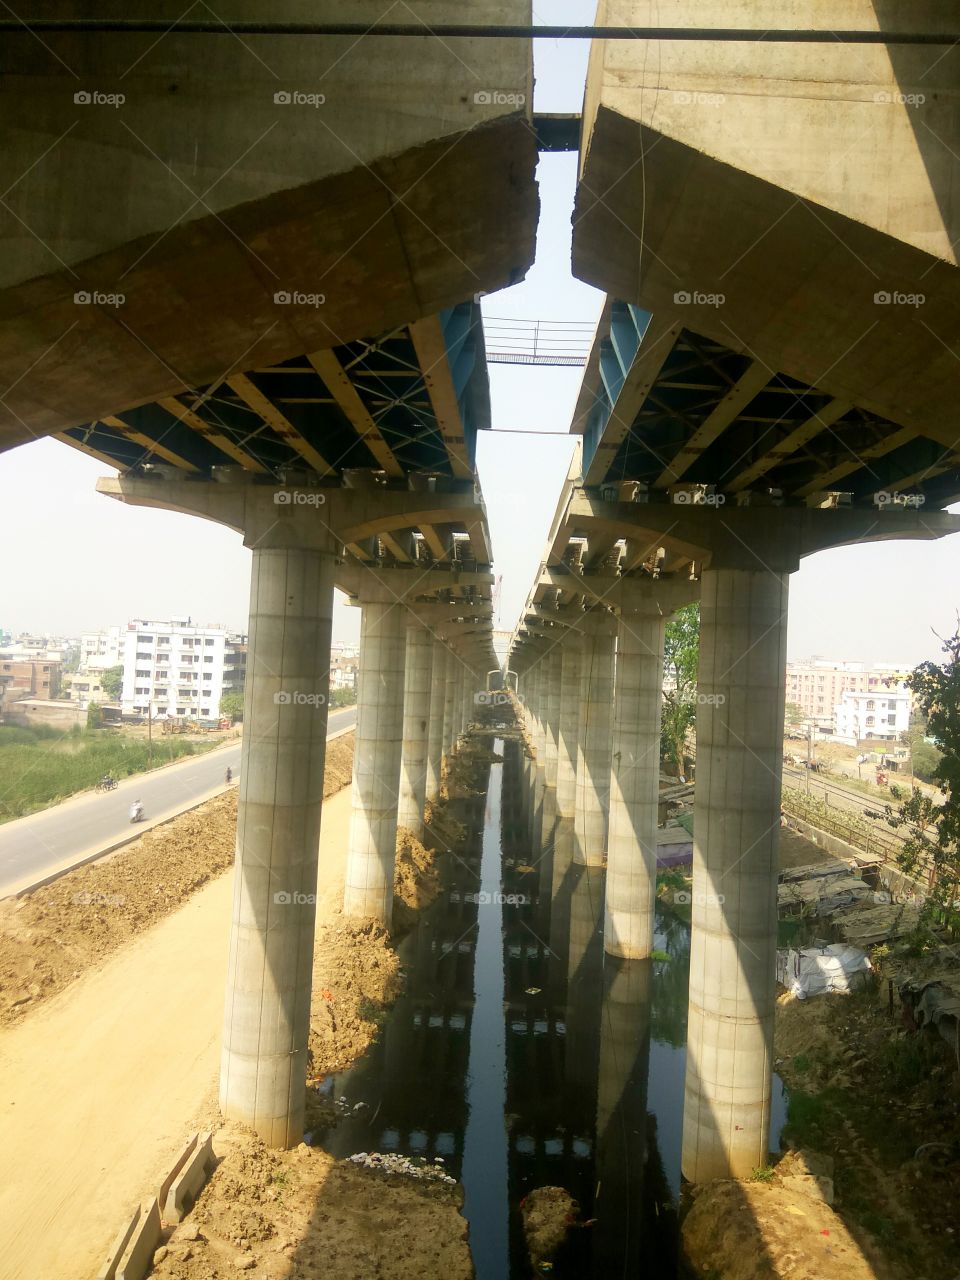 Bridge  in process in city showing glamorous